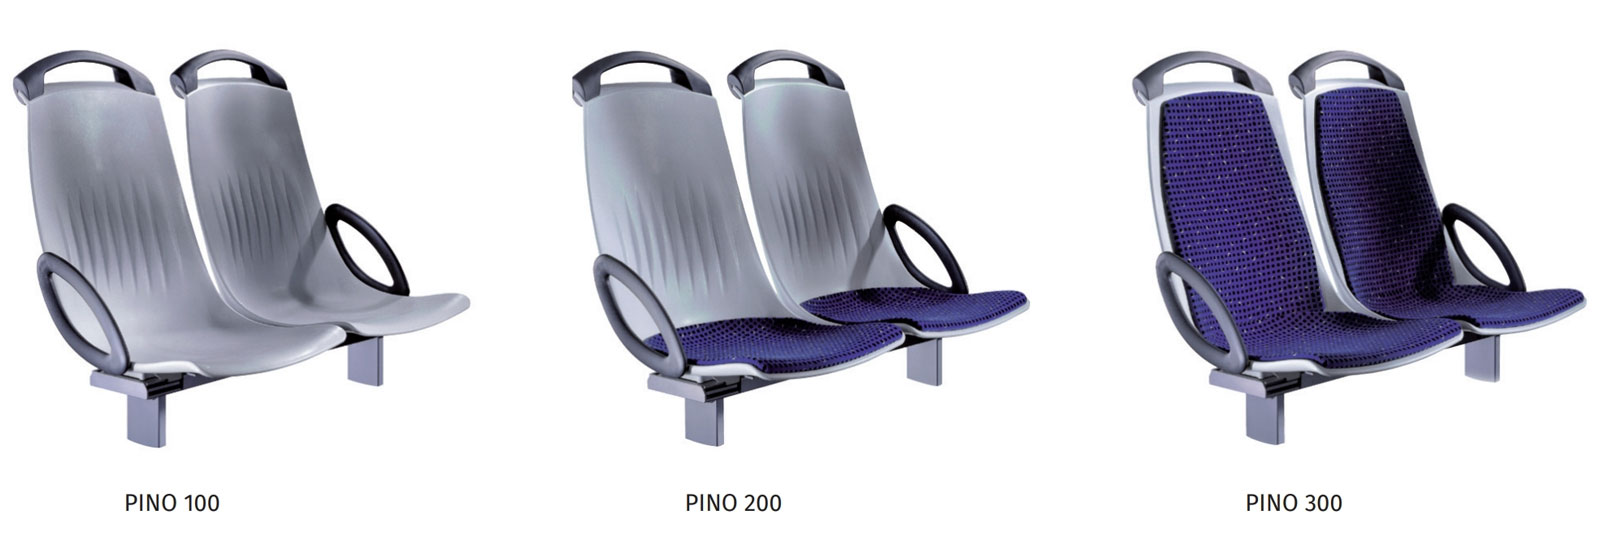 Pino | Versions de siège